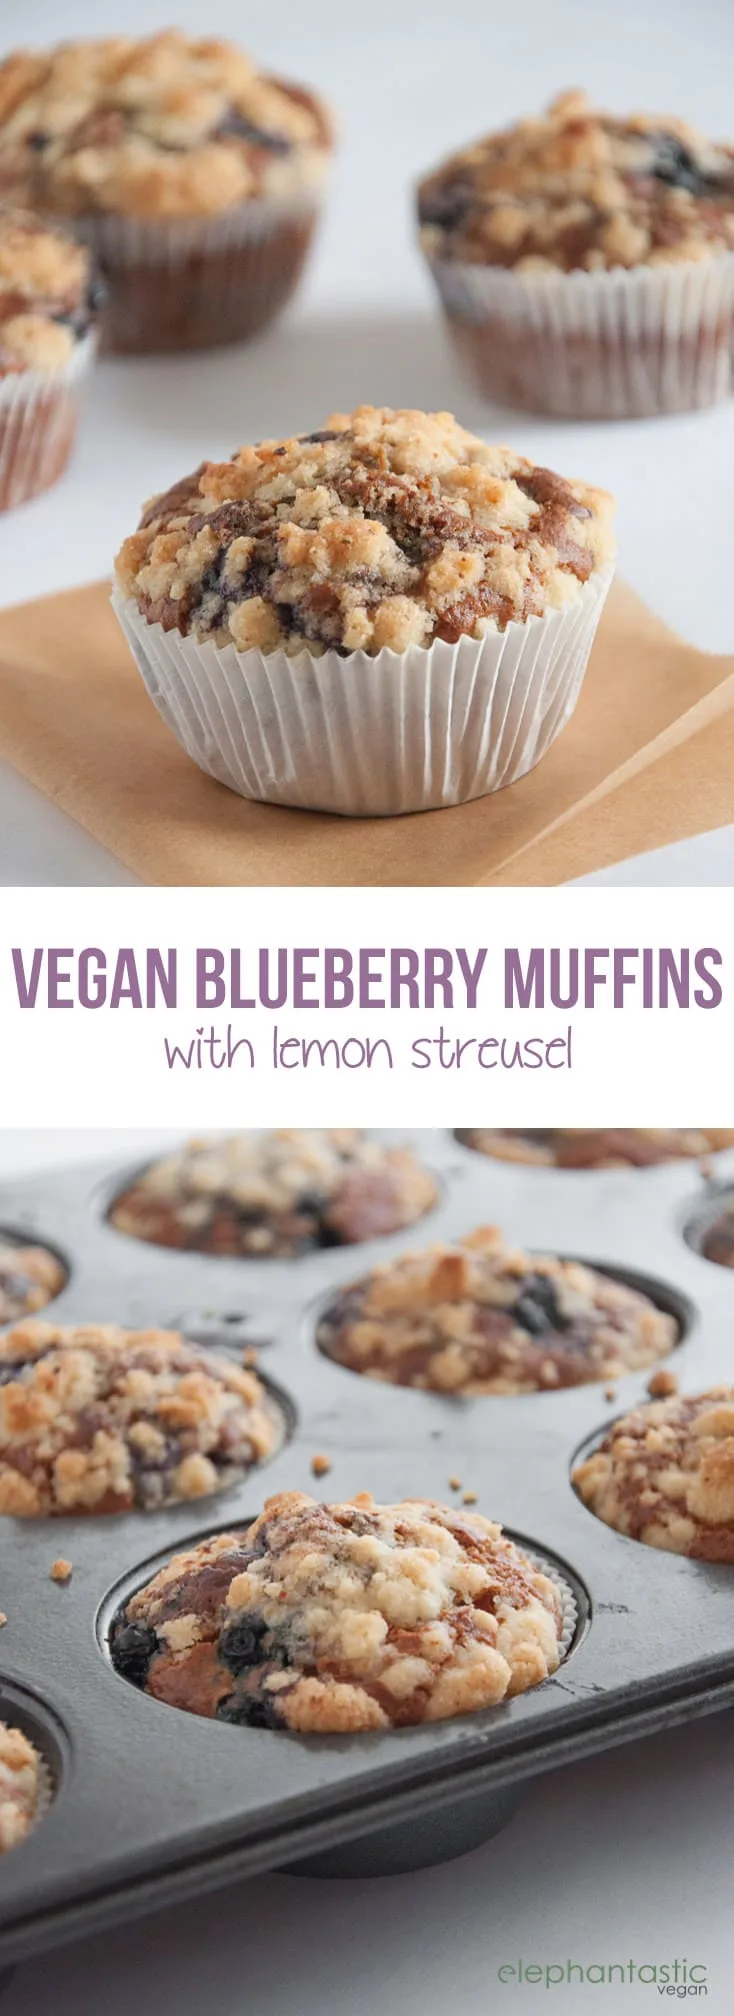 Vegan Blueberry Lemon Streusel Muffins | ElephantasticVegan.com